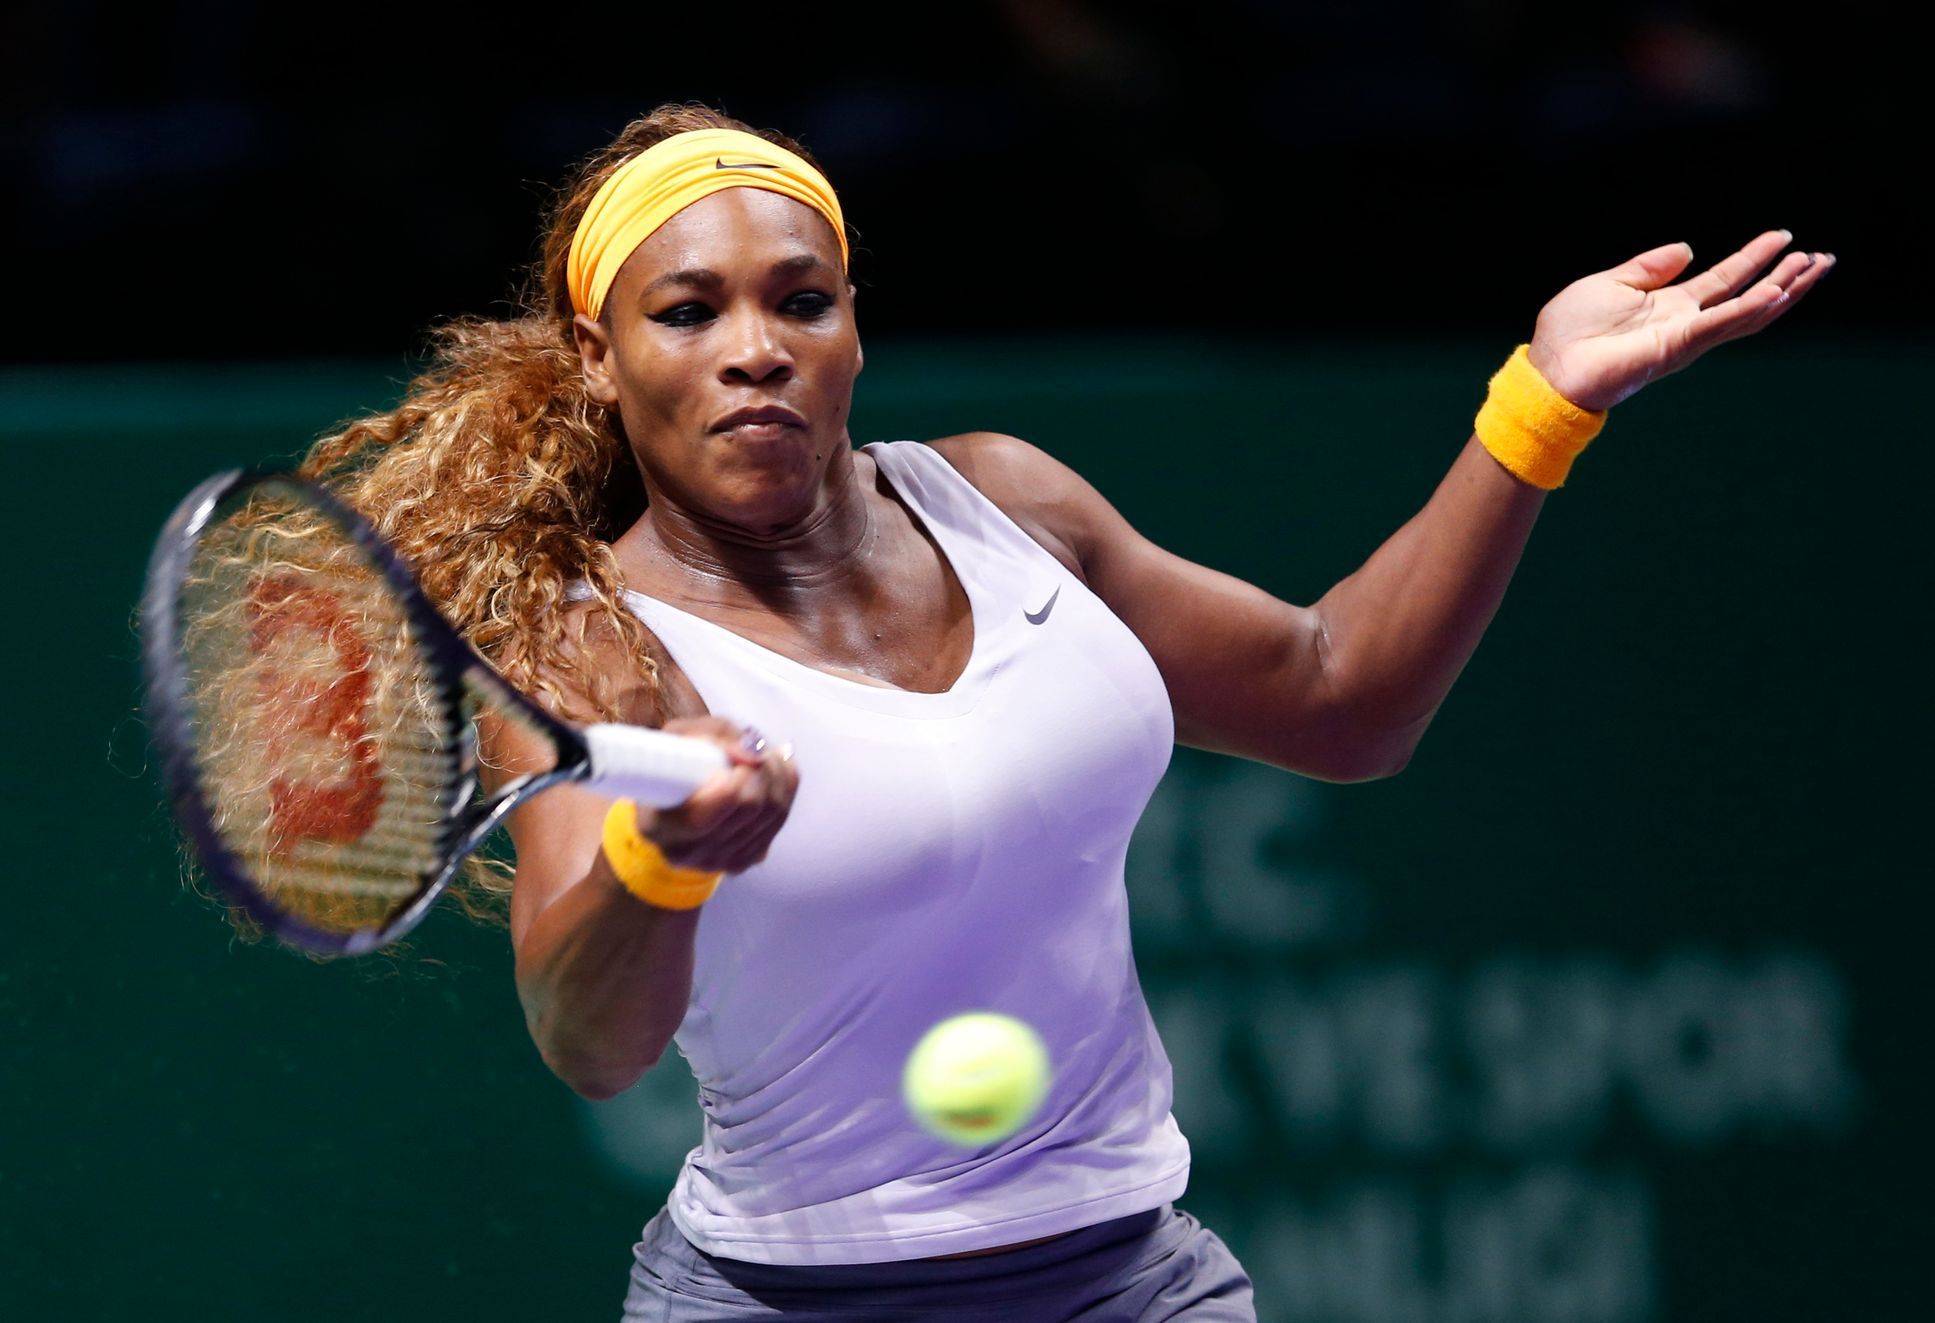 Tenis, Turnaj mistryň 2013: Serena Williamsová